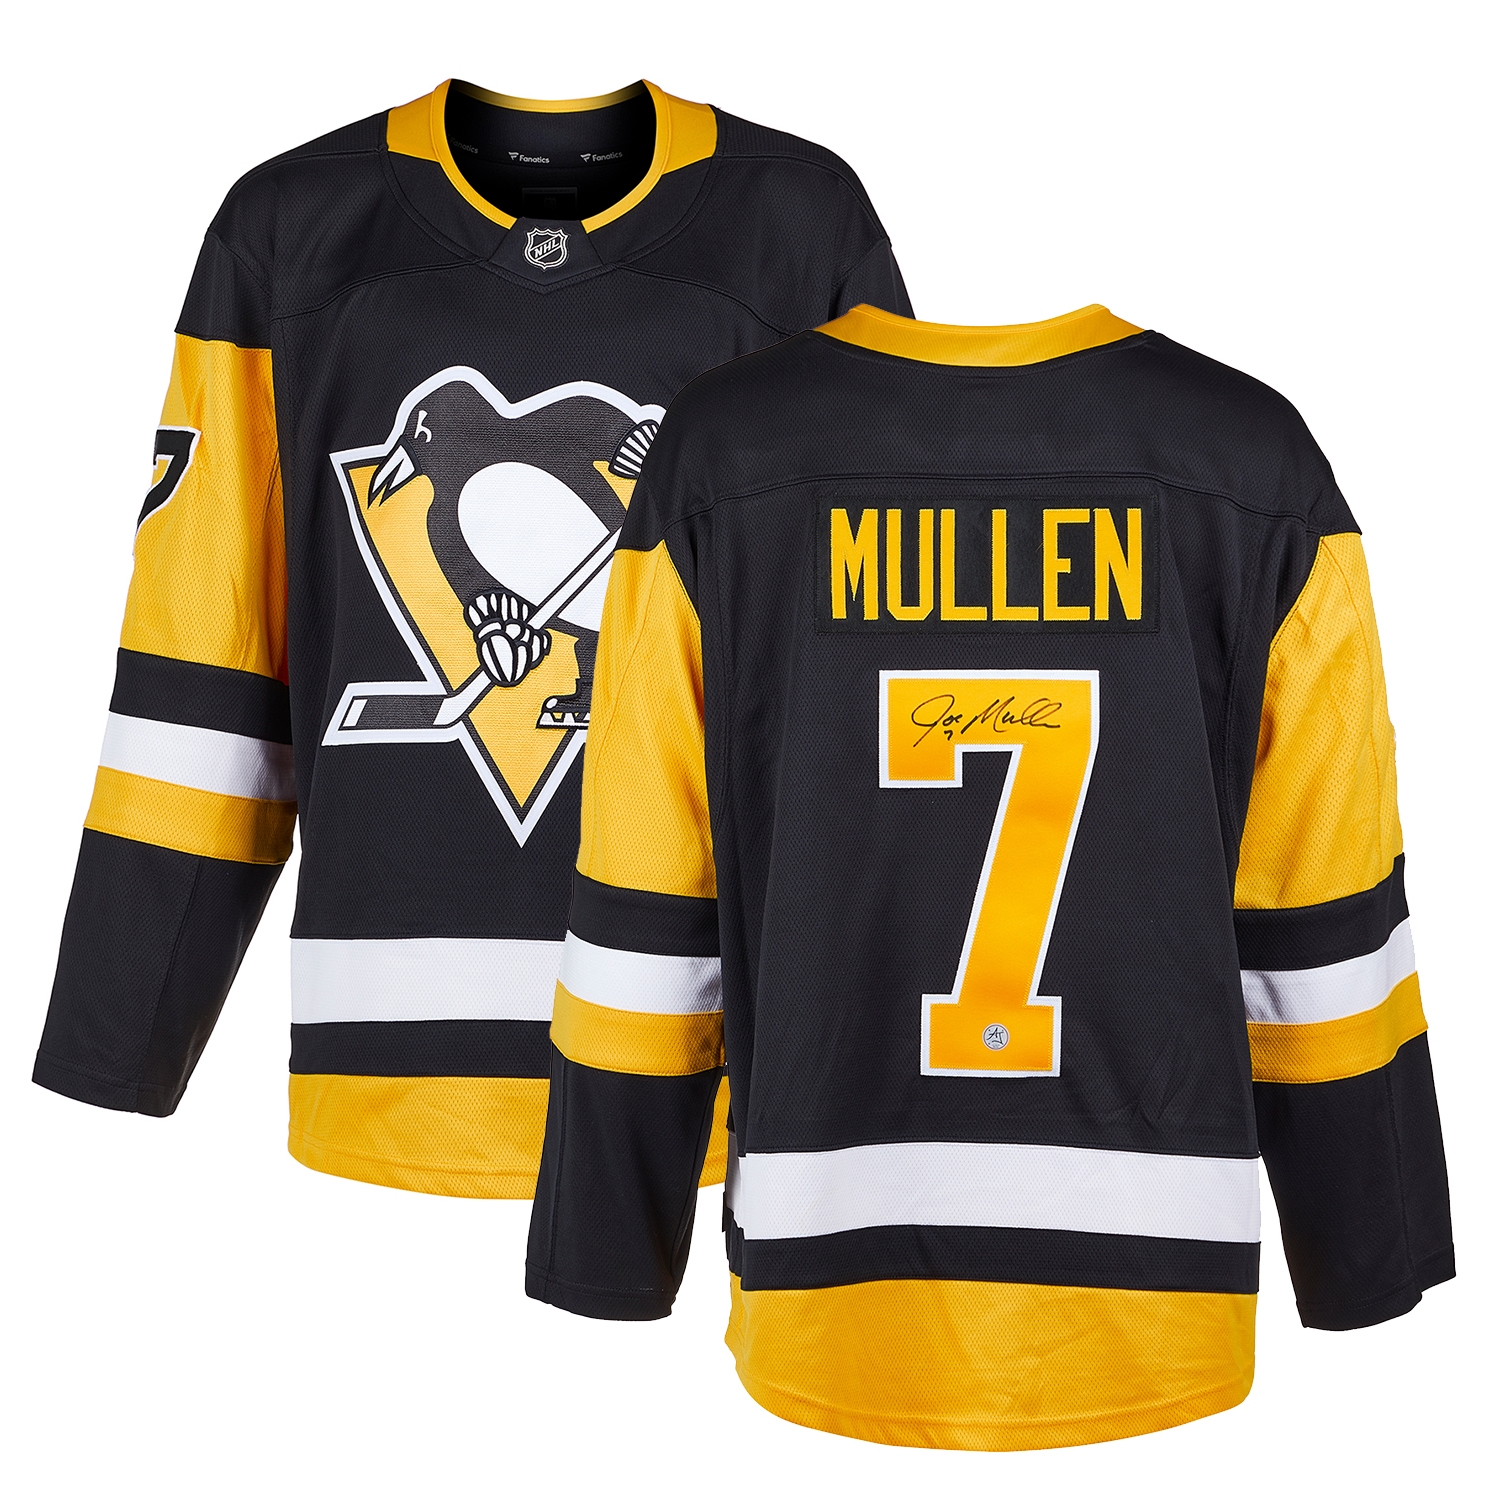 Joe Mullen Autographed Pittsburgh Penguins Fanatics Jersey